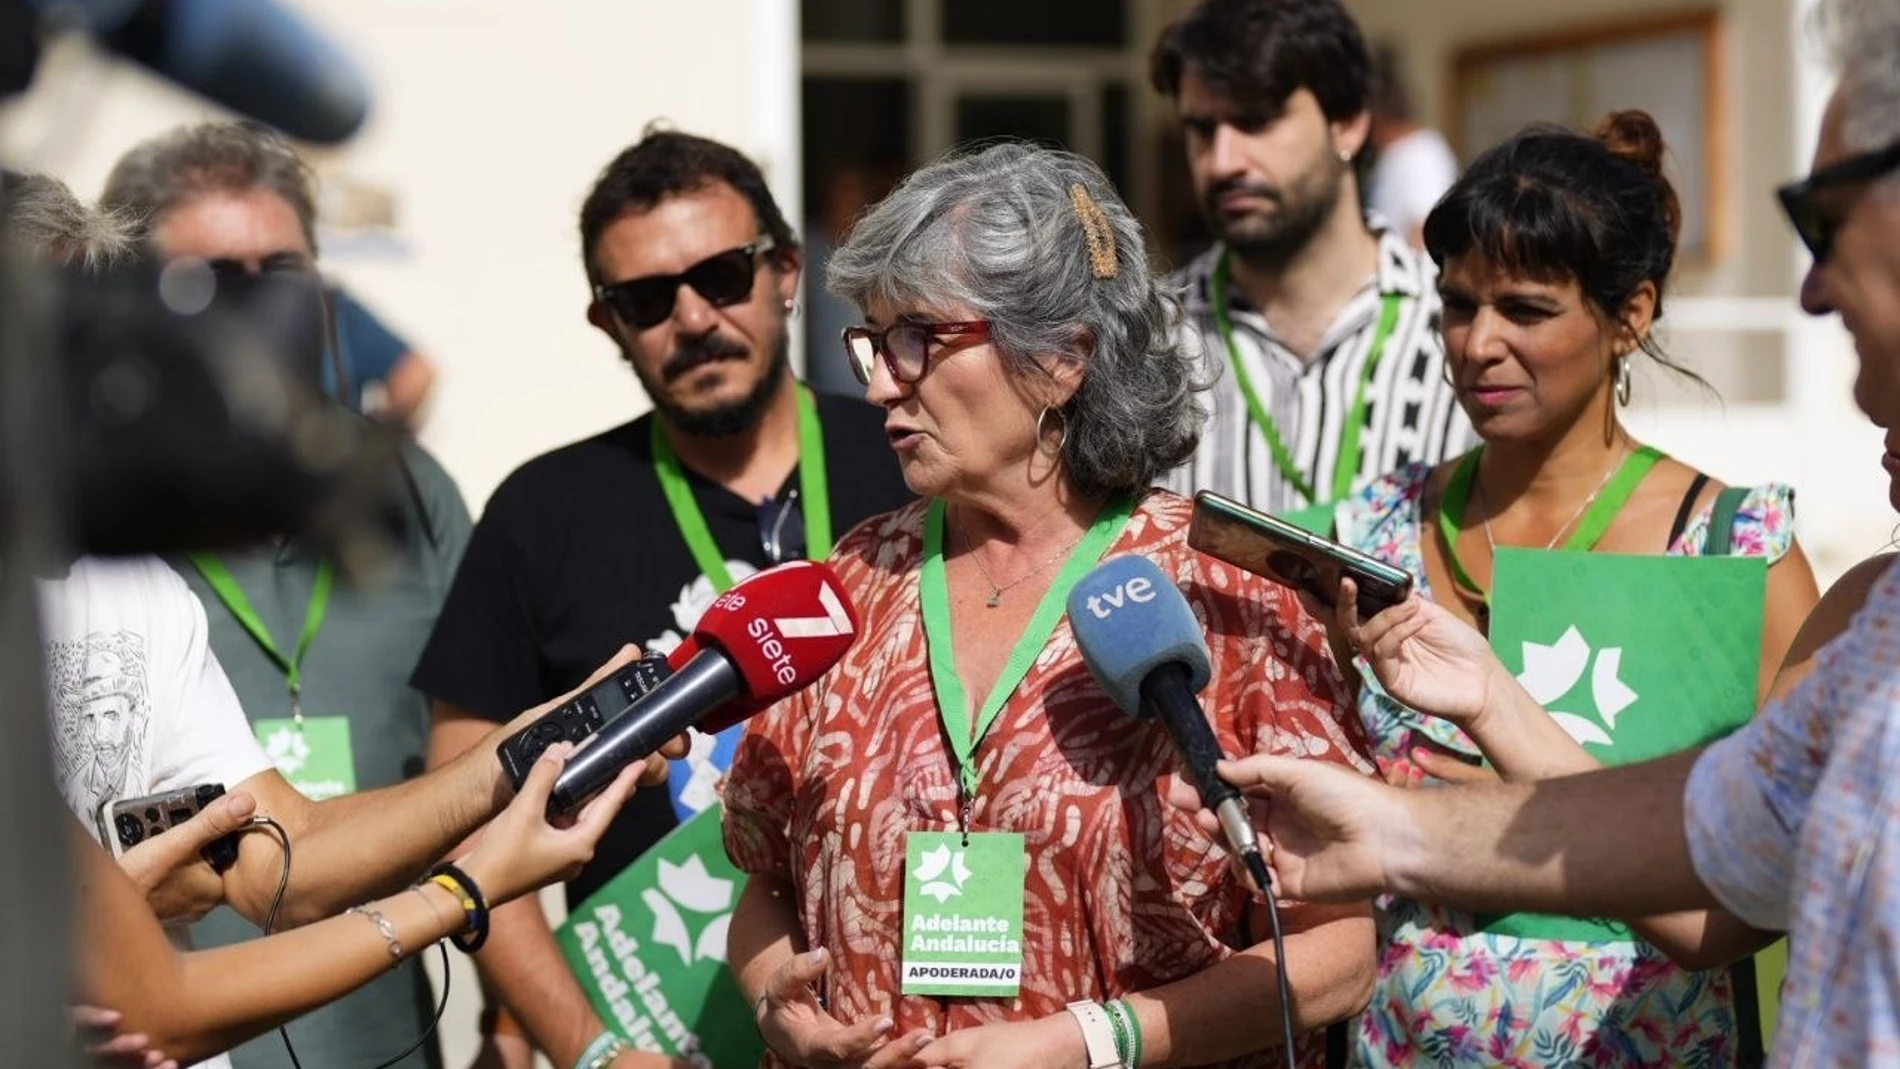 La candidata de Adelante Andalucía, Pilar González, acompañada por José María González «Kichi» y Teresa Rodríguez